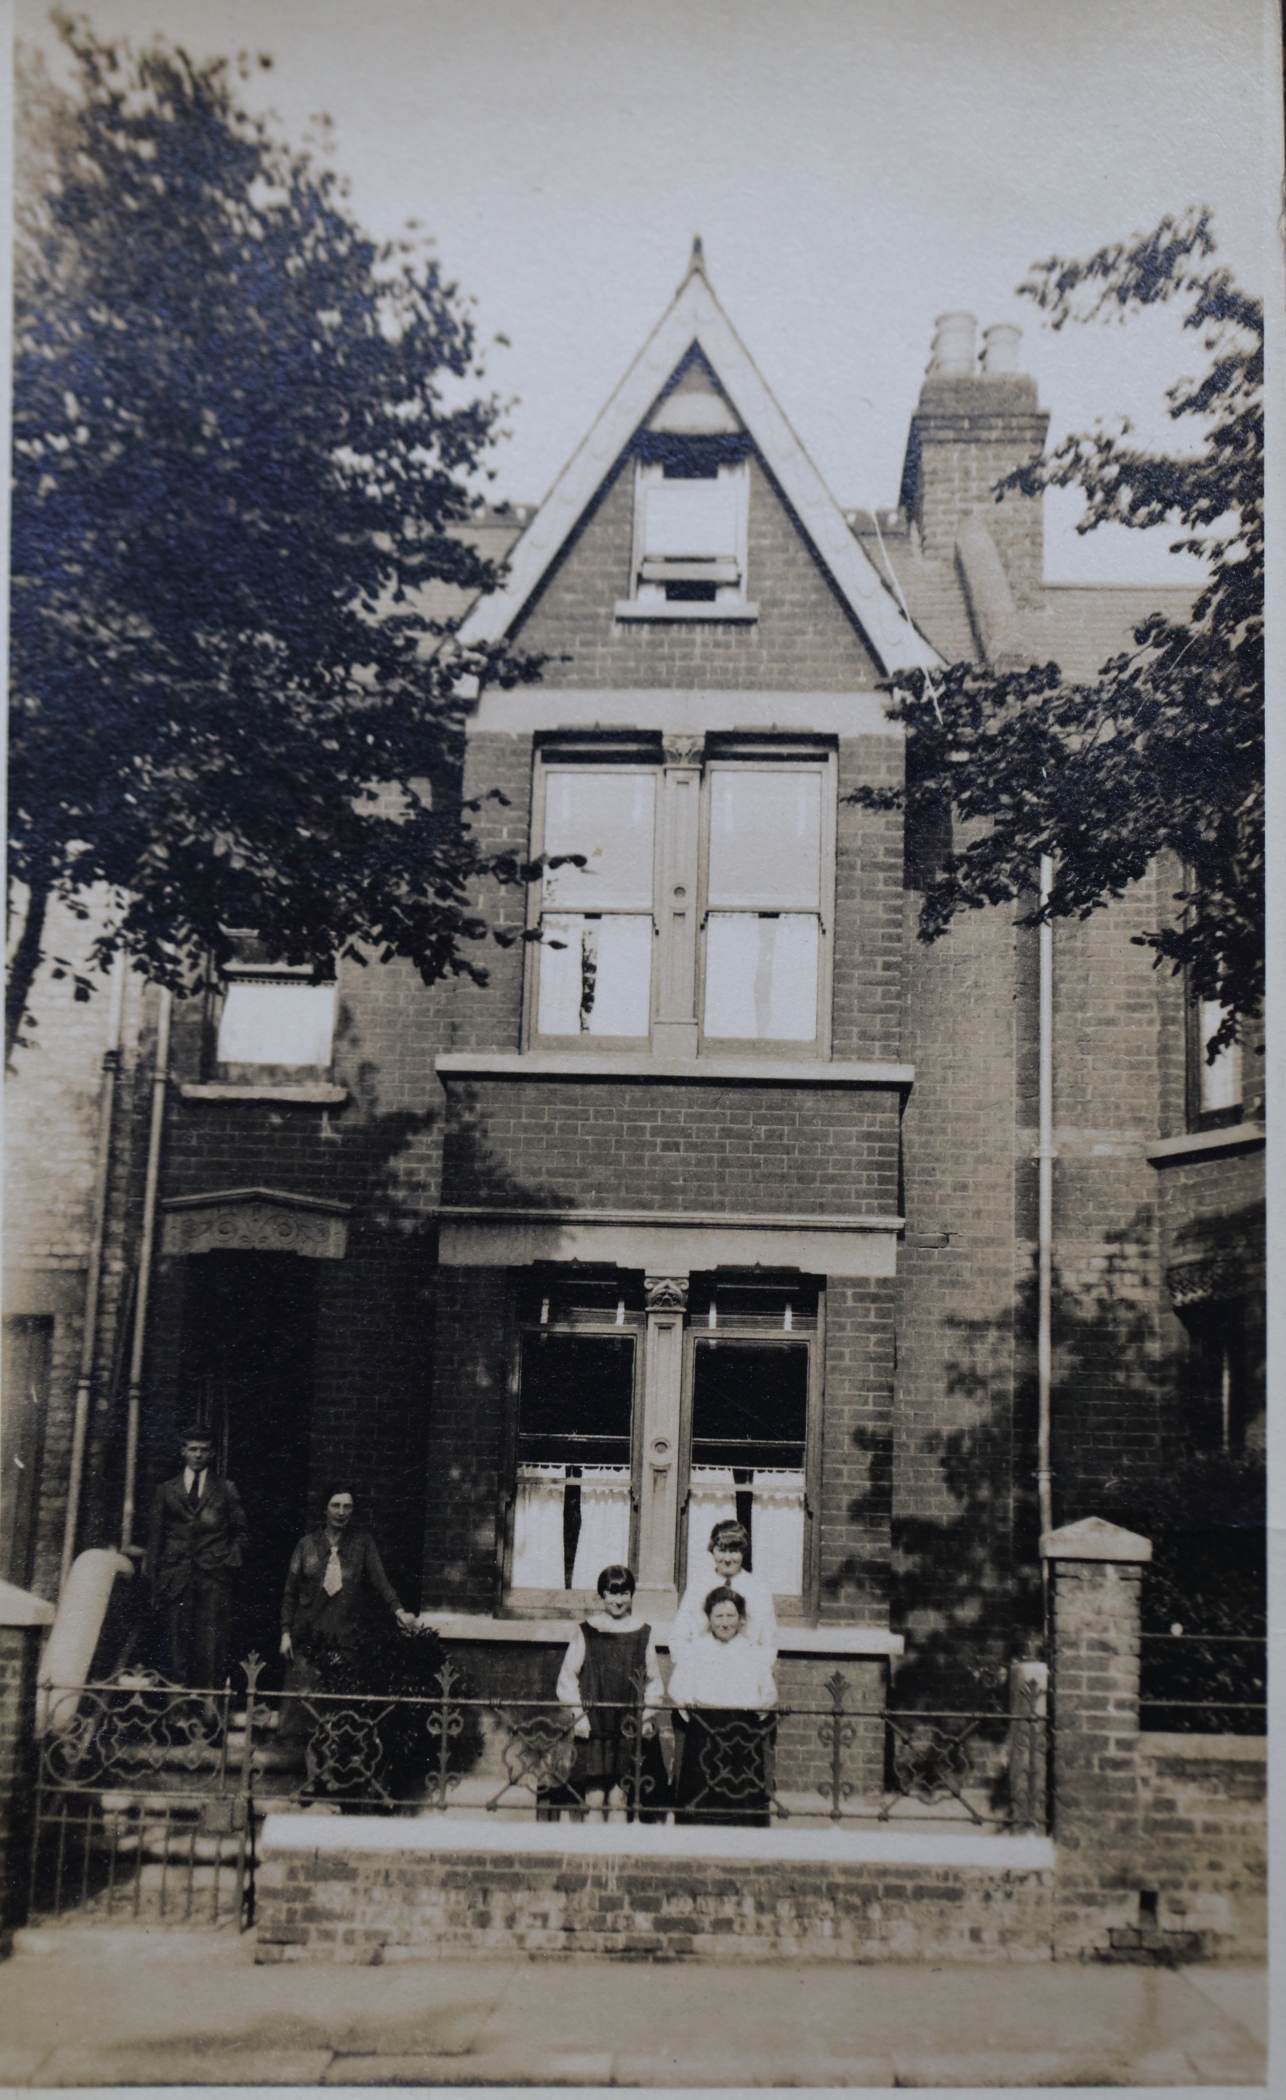  Light family at 22 Rock Avenue Gillingham Kent 1926